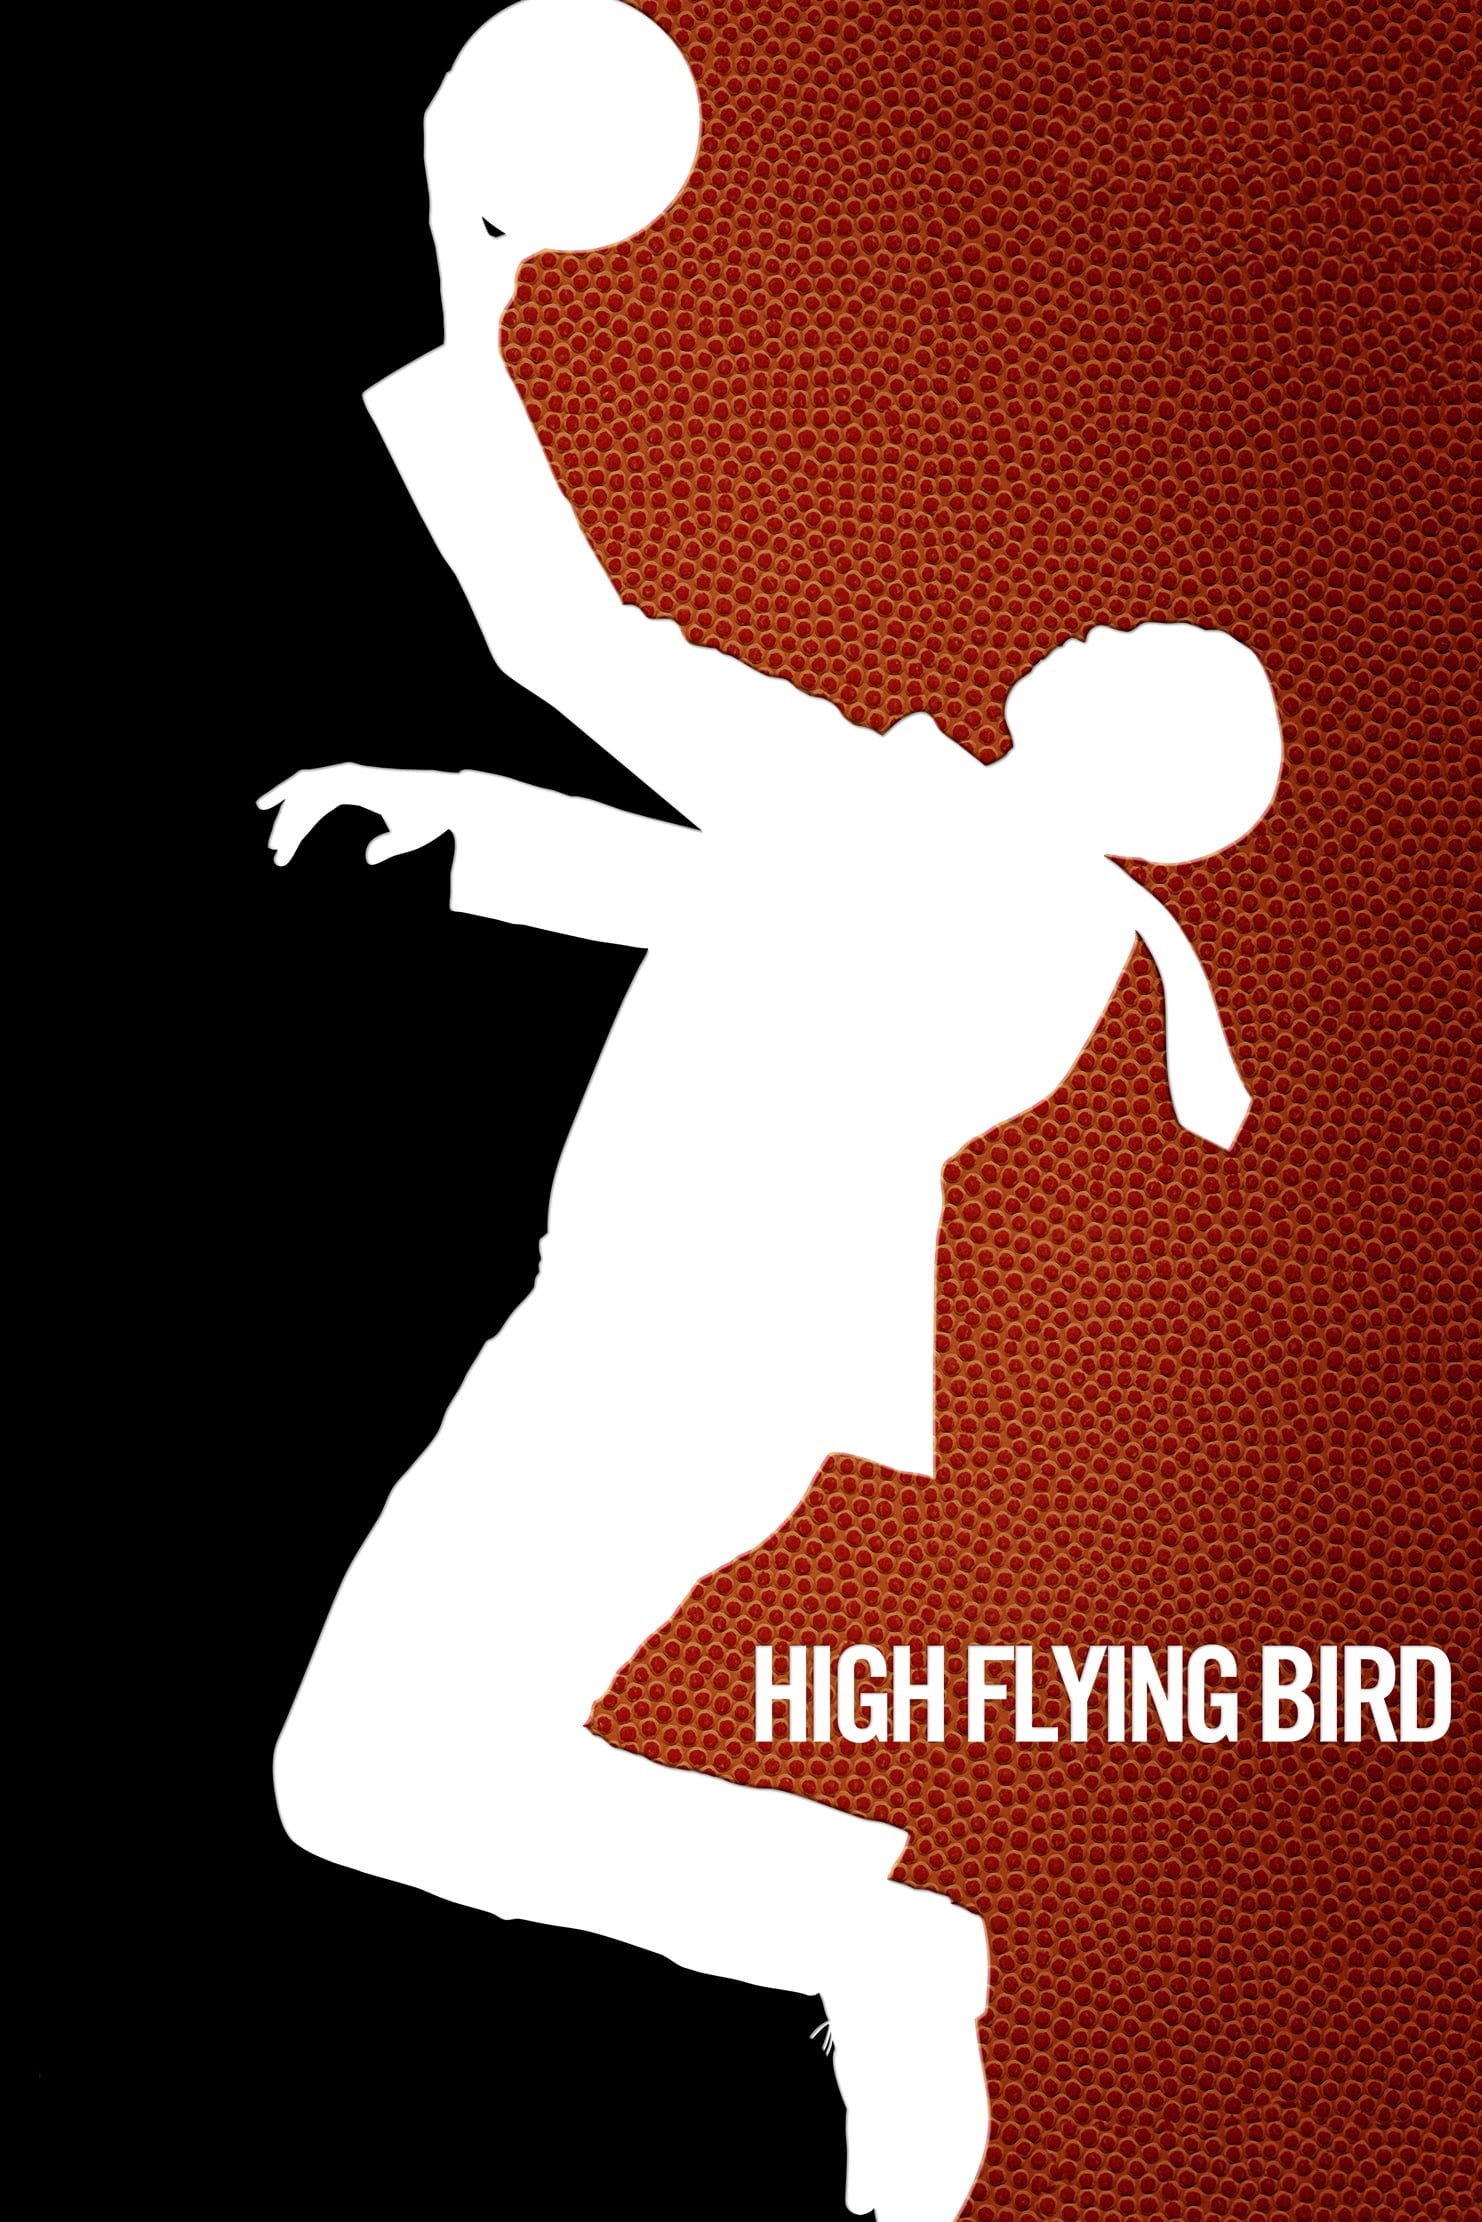 Siêu sao bóng rổ - High Flying Bird (2019)